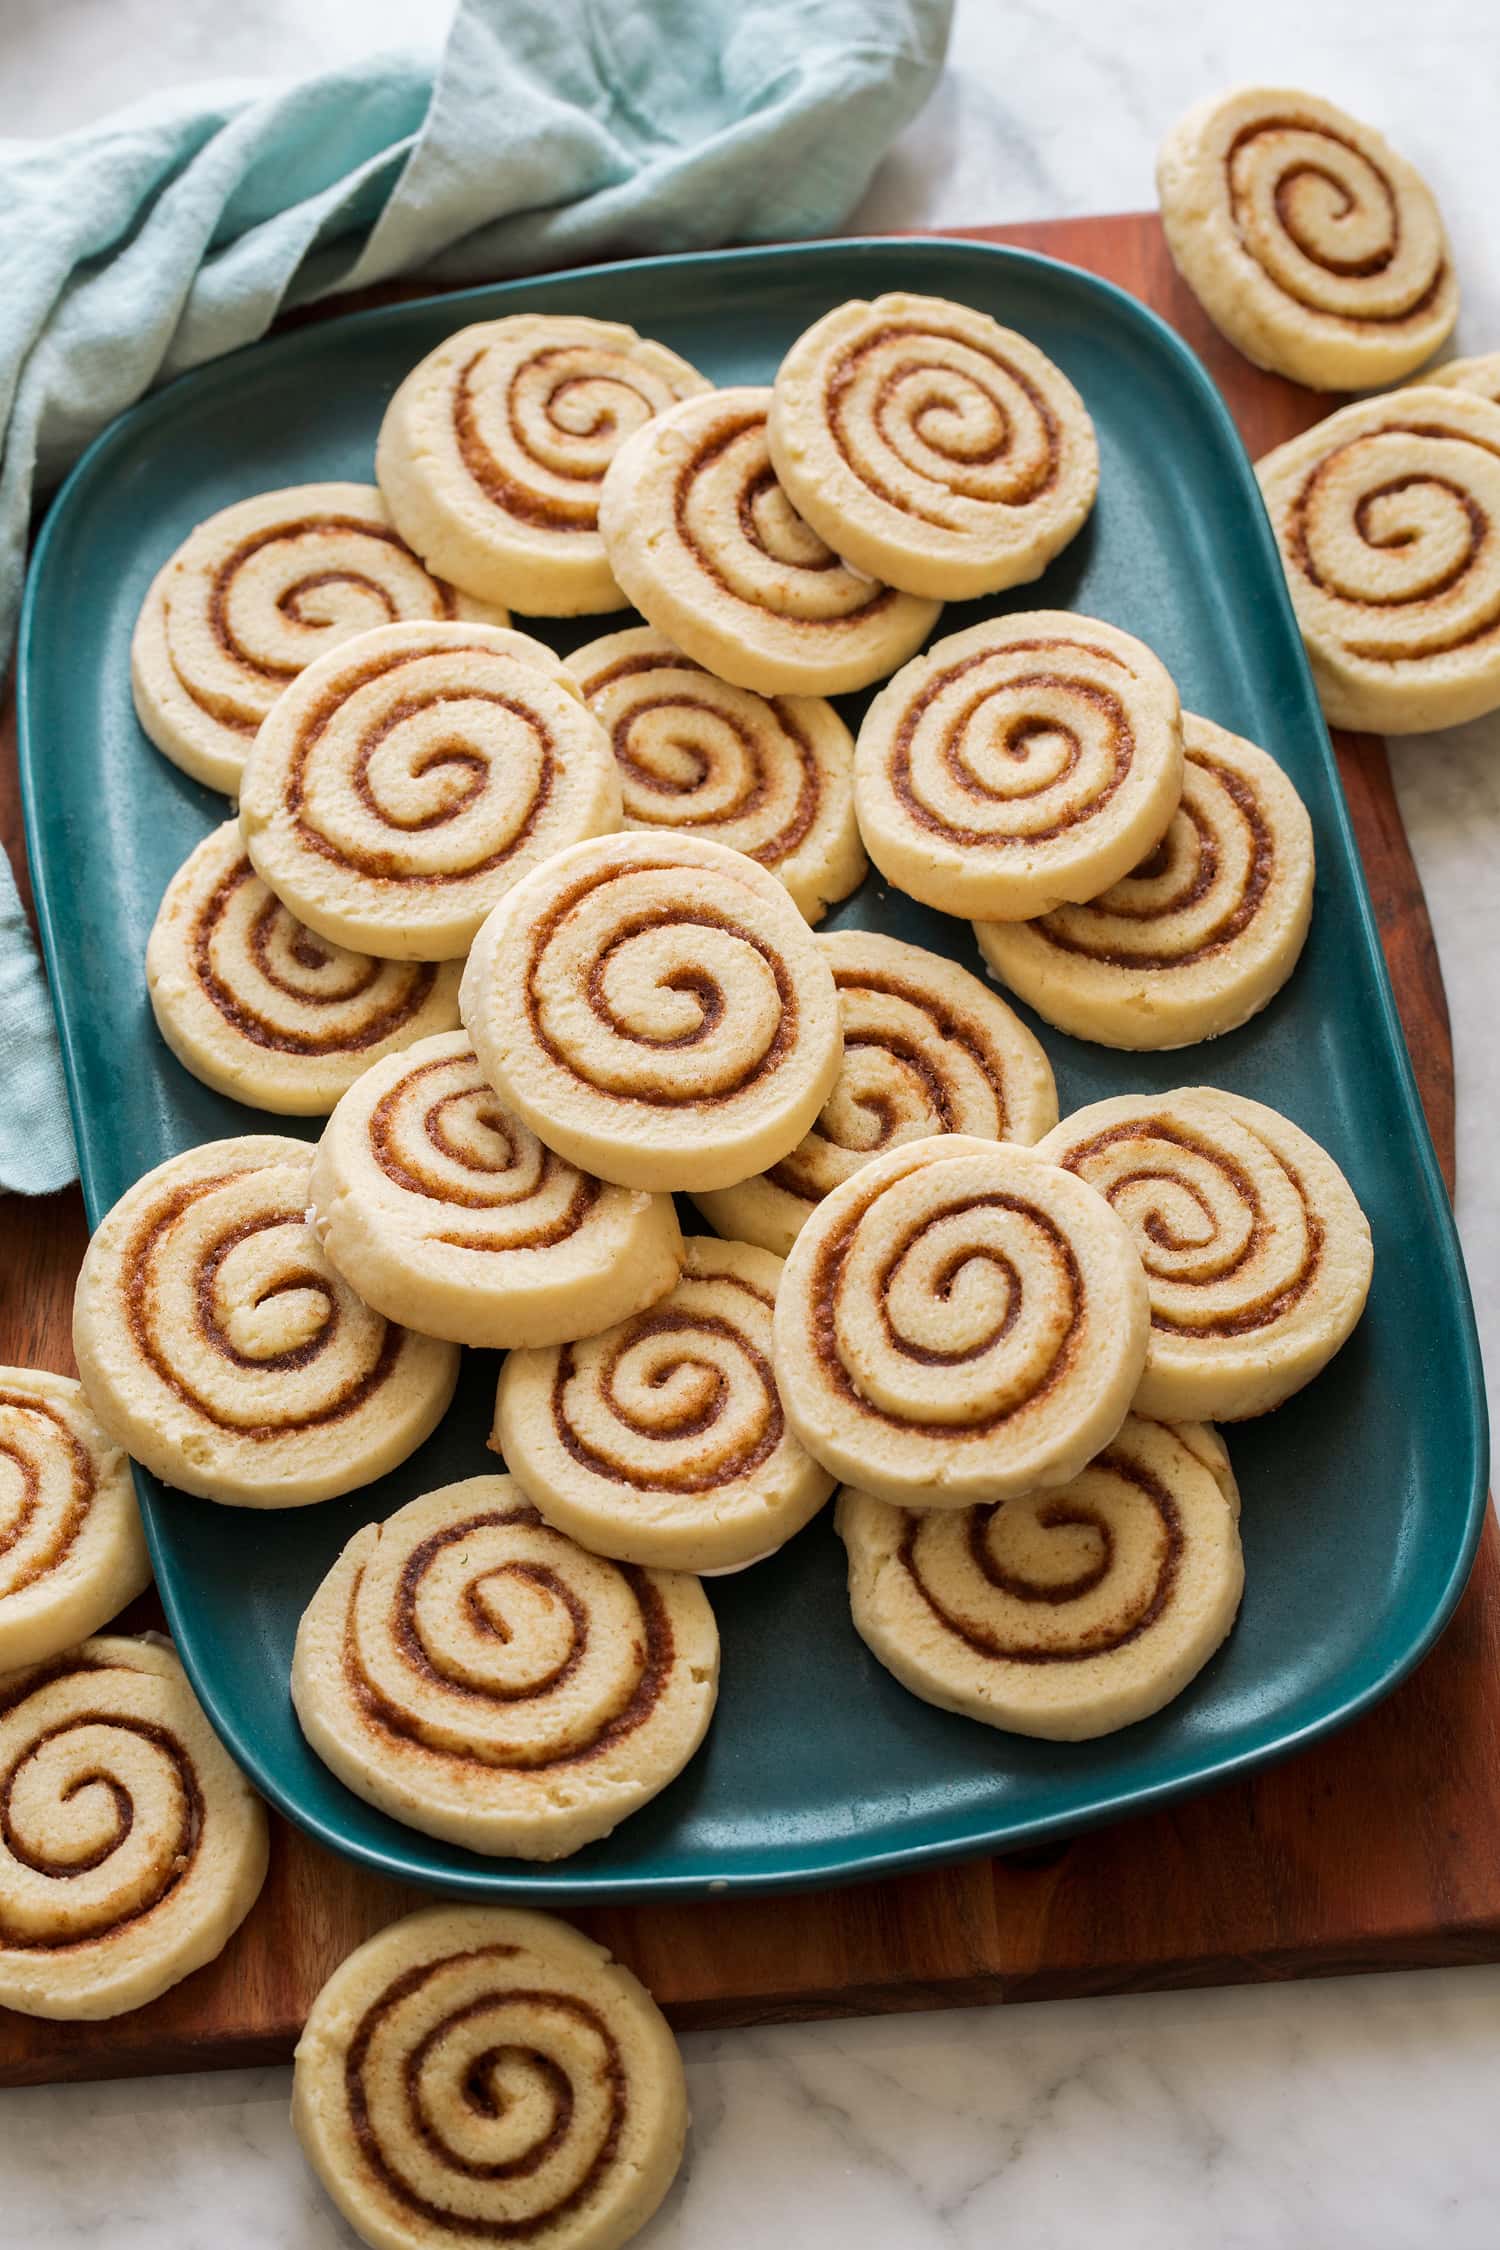 Swirled slice and bake cookies.